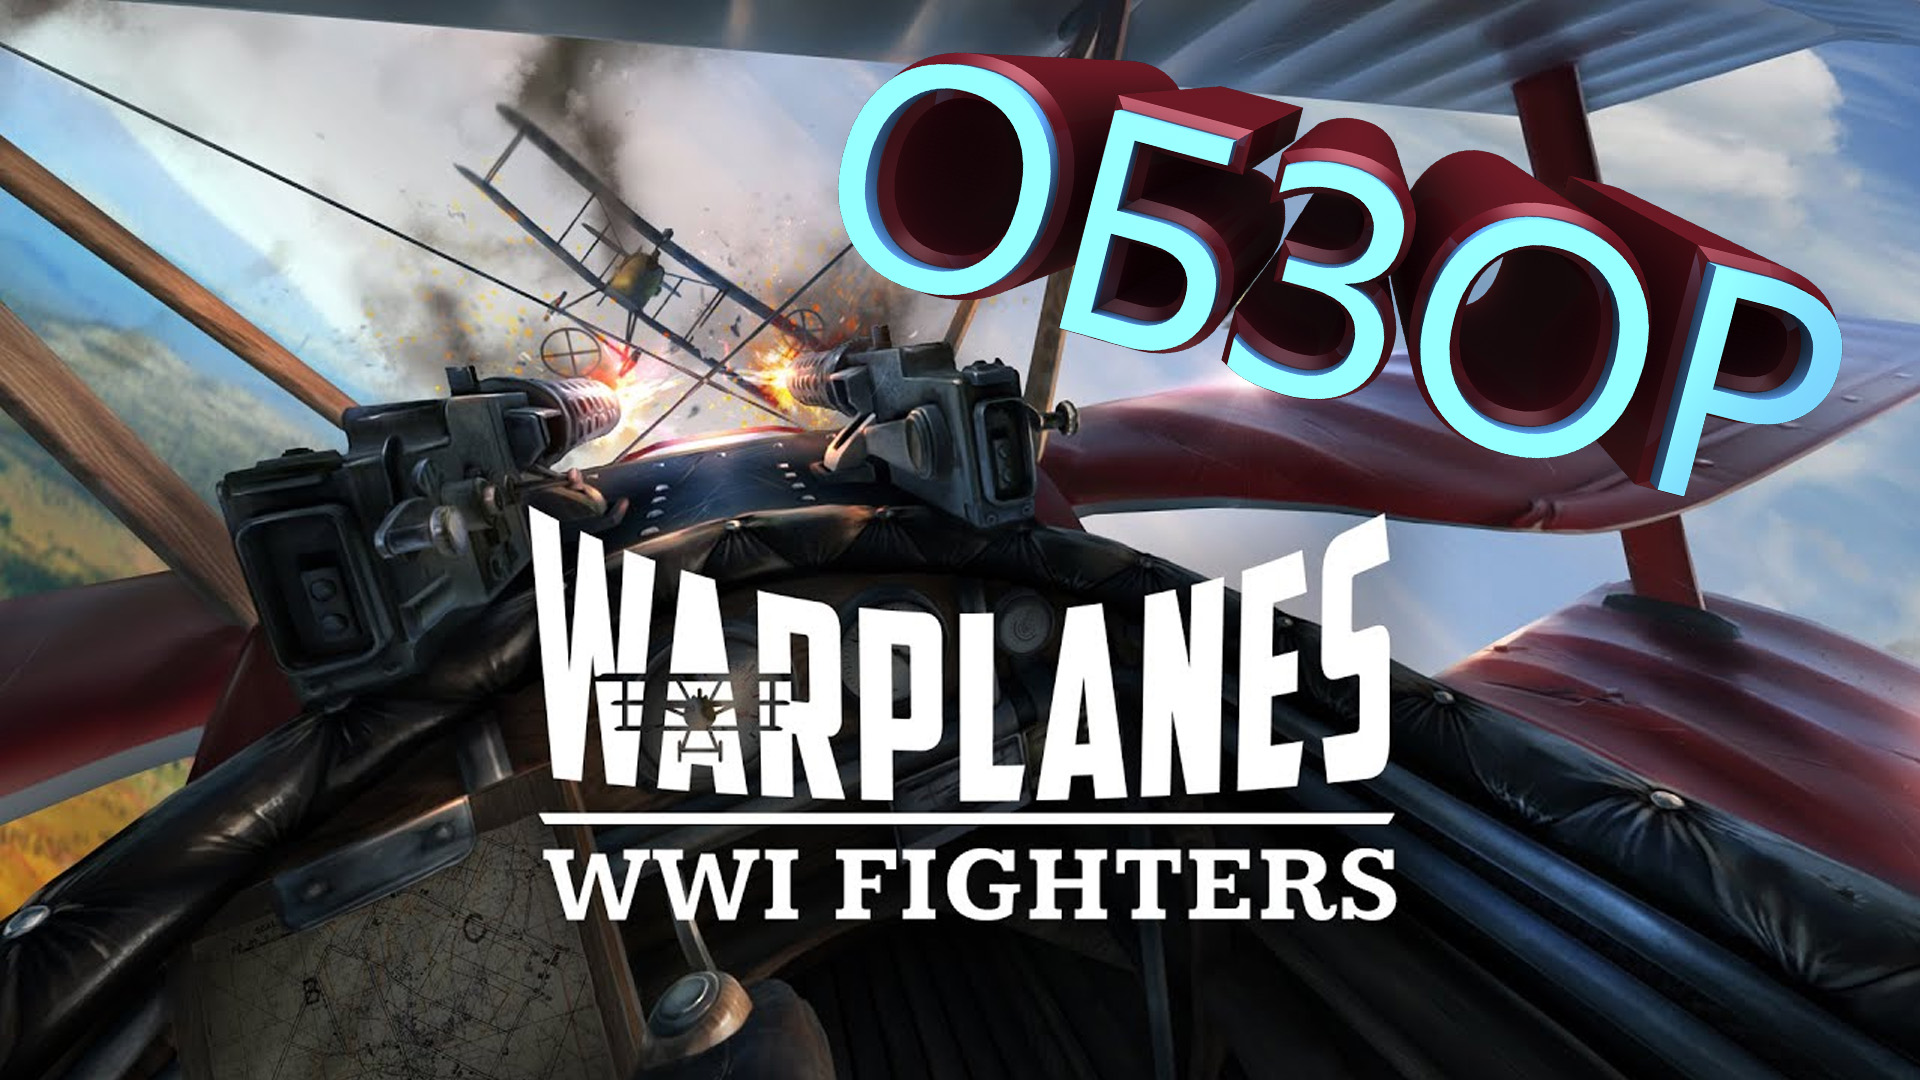 VR Warplanes WW1 Fighters - ОБЗОР ИГРЫ (АВИА СИМУЛЯТОР НАЧАЛА ХХ ВЕКА)